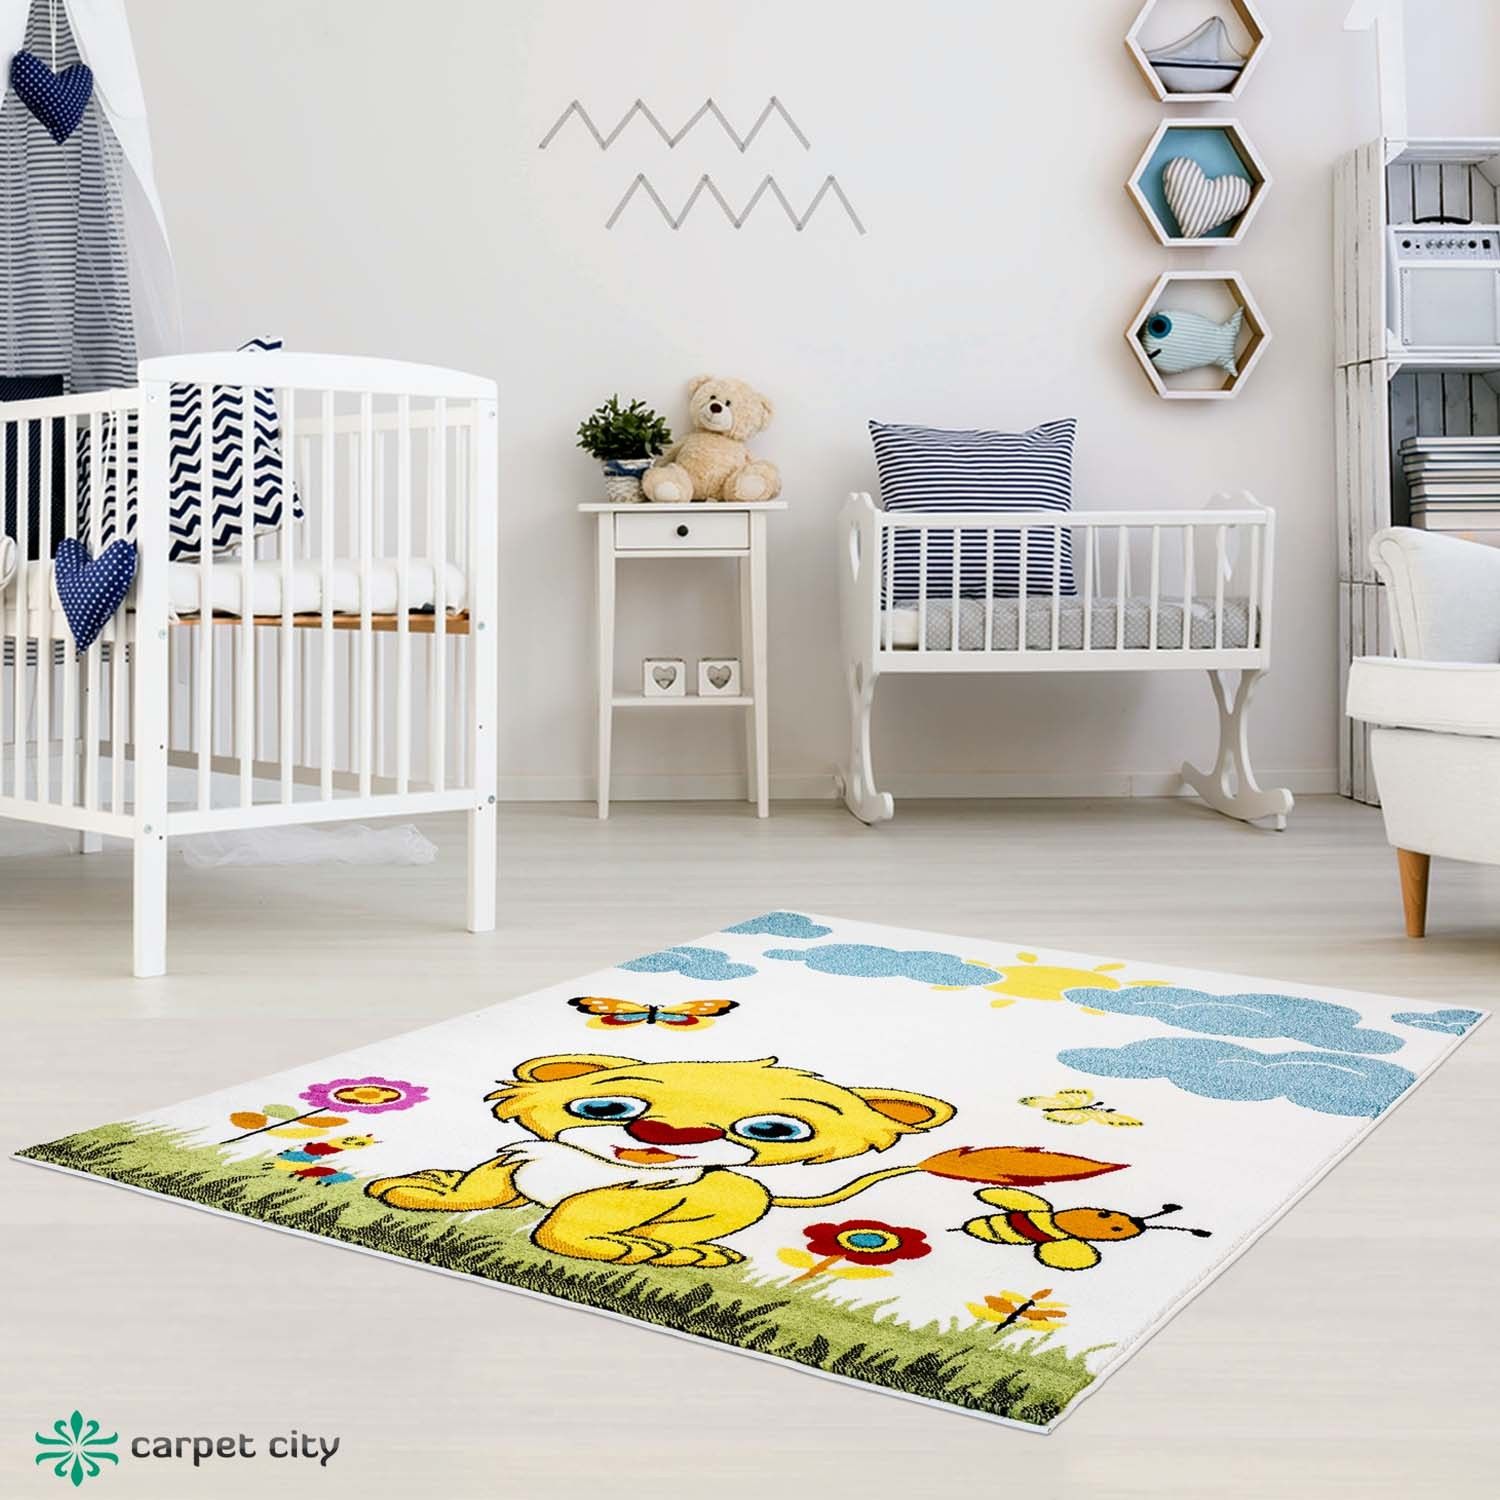 DomTextilu Dokonalý detský krémový koberec do detskej izby levíča 42021-197396